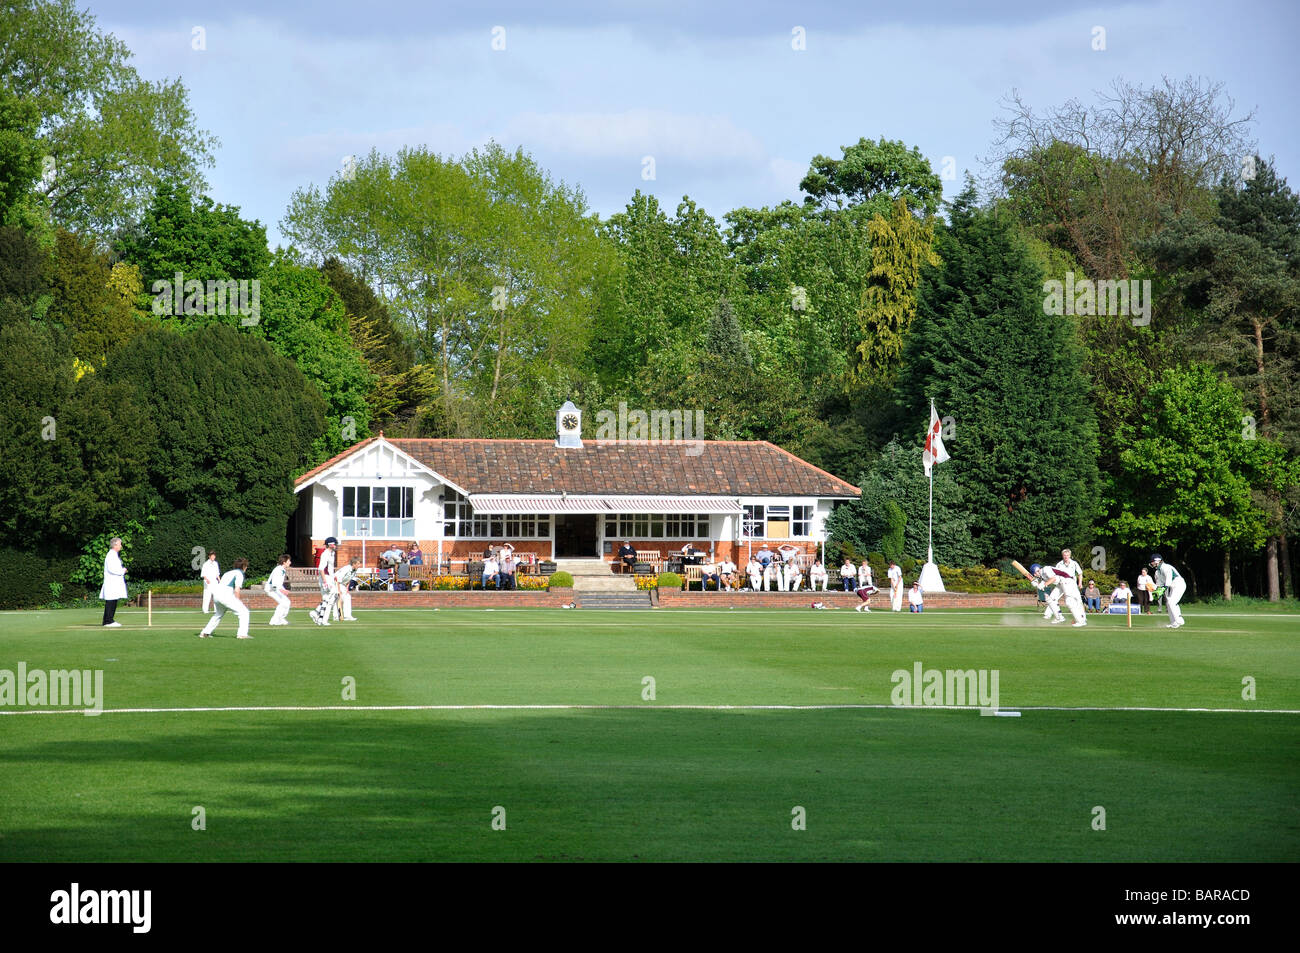 Match de cricket, St.George's College, Weybridge, Surrey, Angleterre, Royaume-Uni Banque D'Images